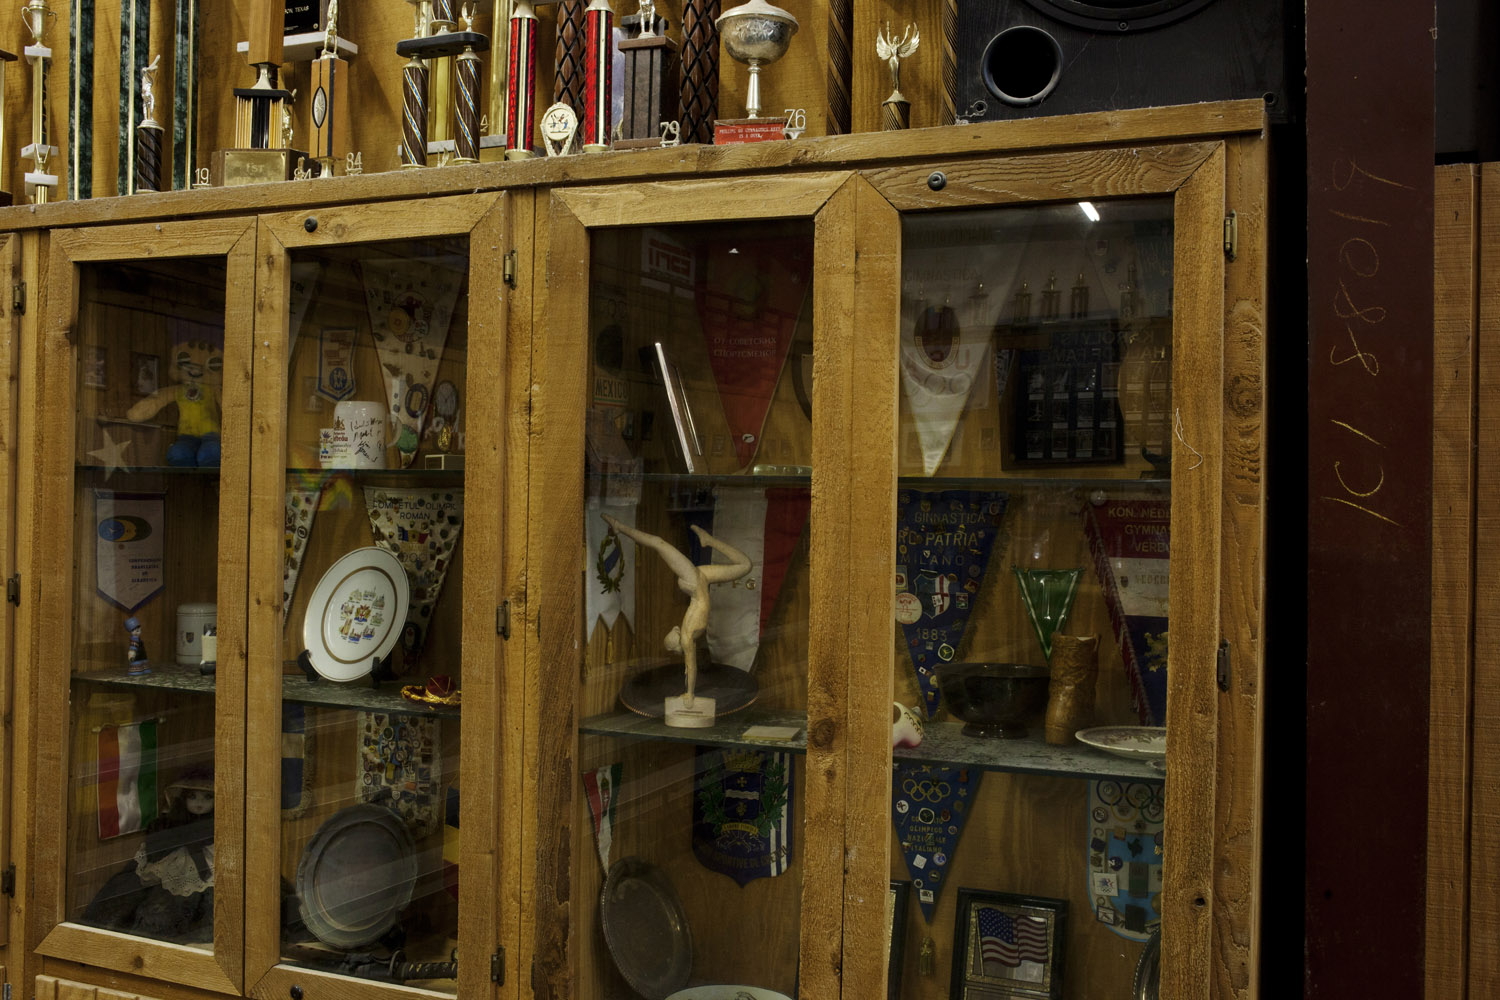 A display of gymnastics trophies and awards at Karolyi's Camp.